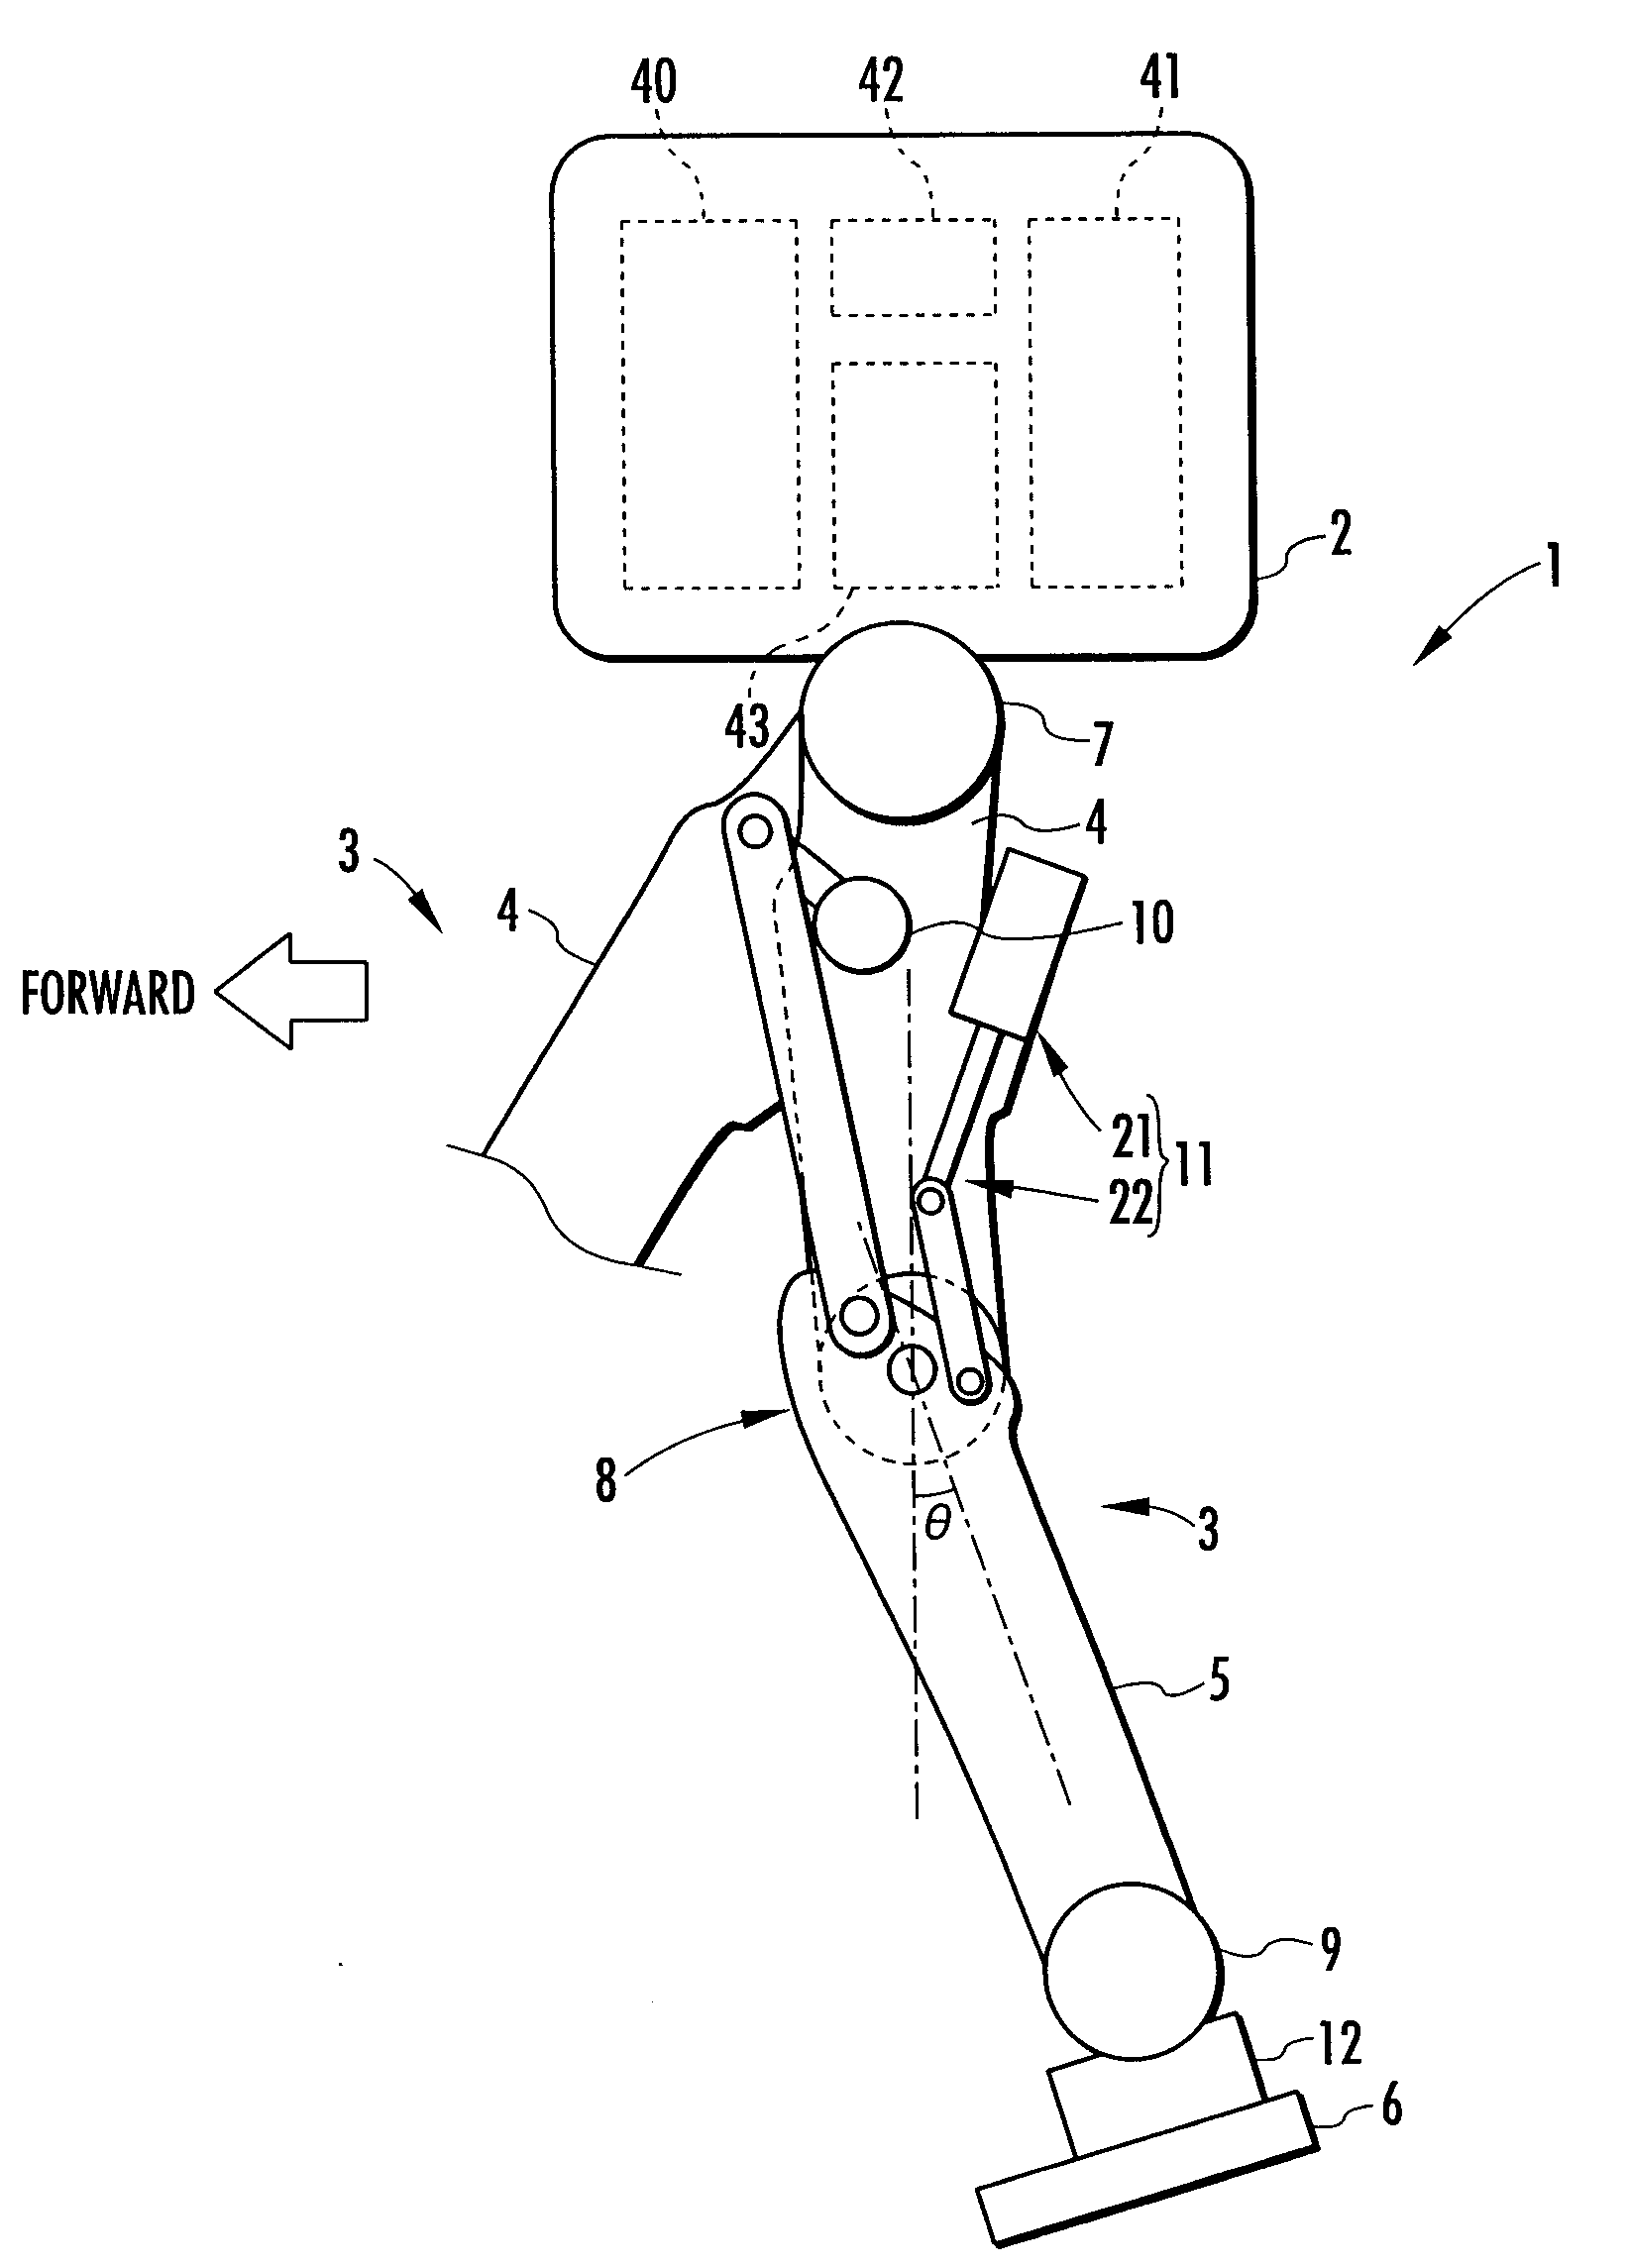 Leg Joint Assist Device of Legged Mobile Robot